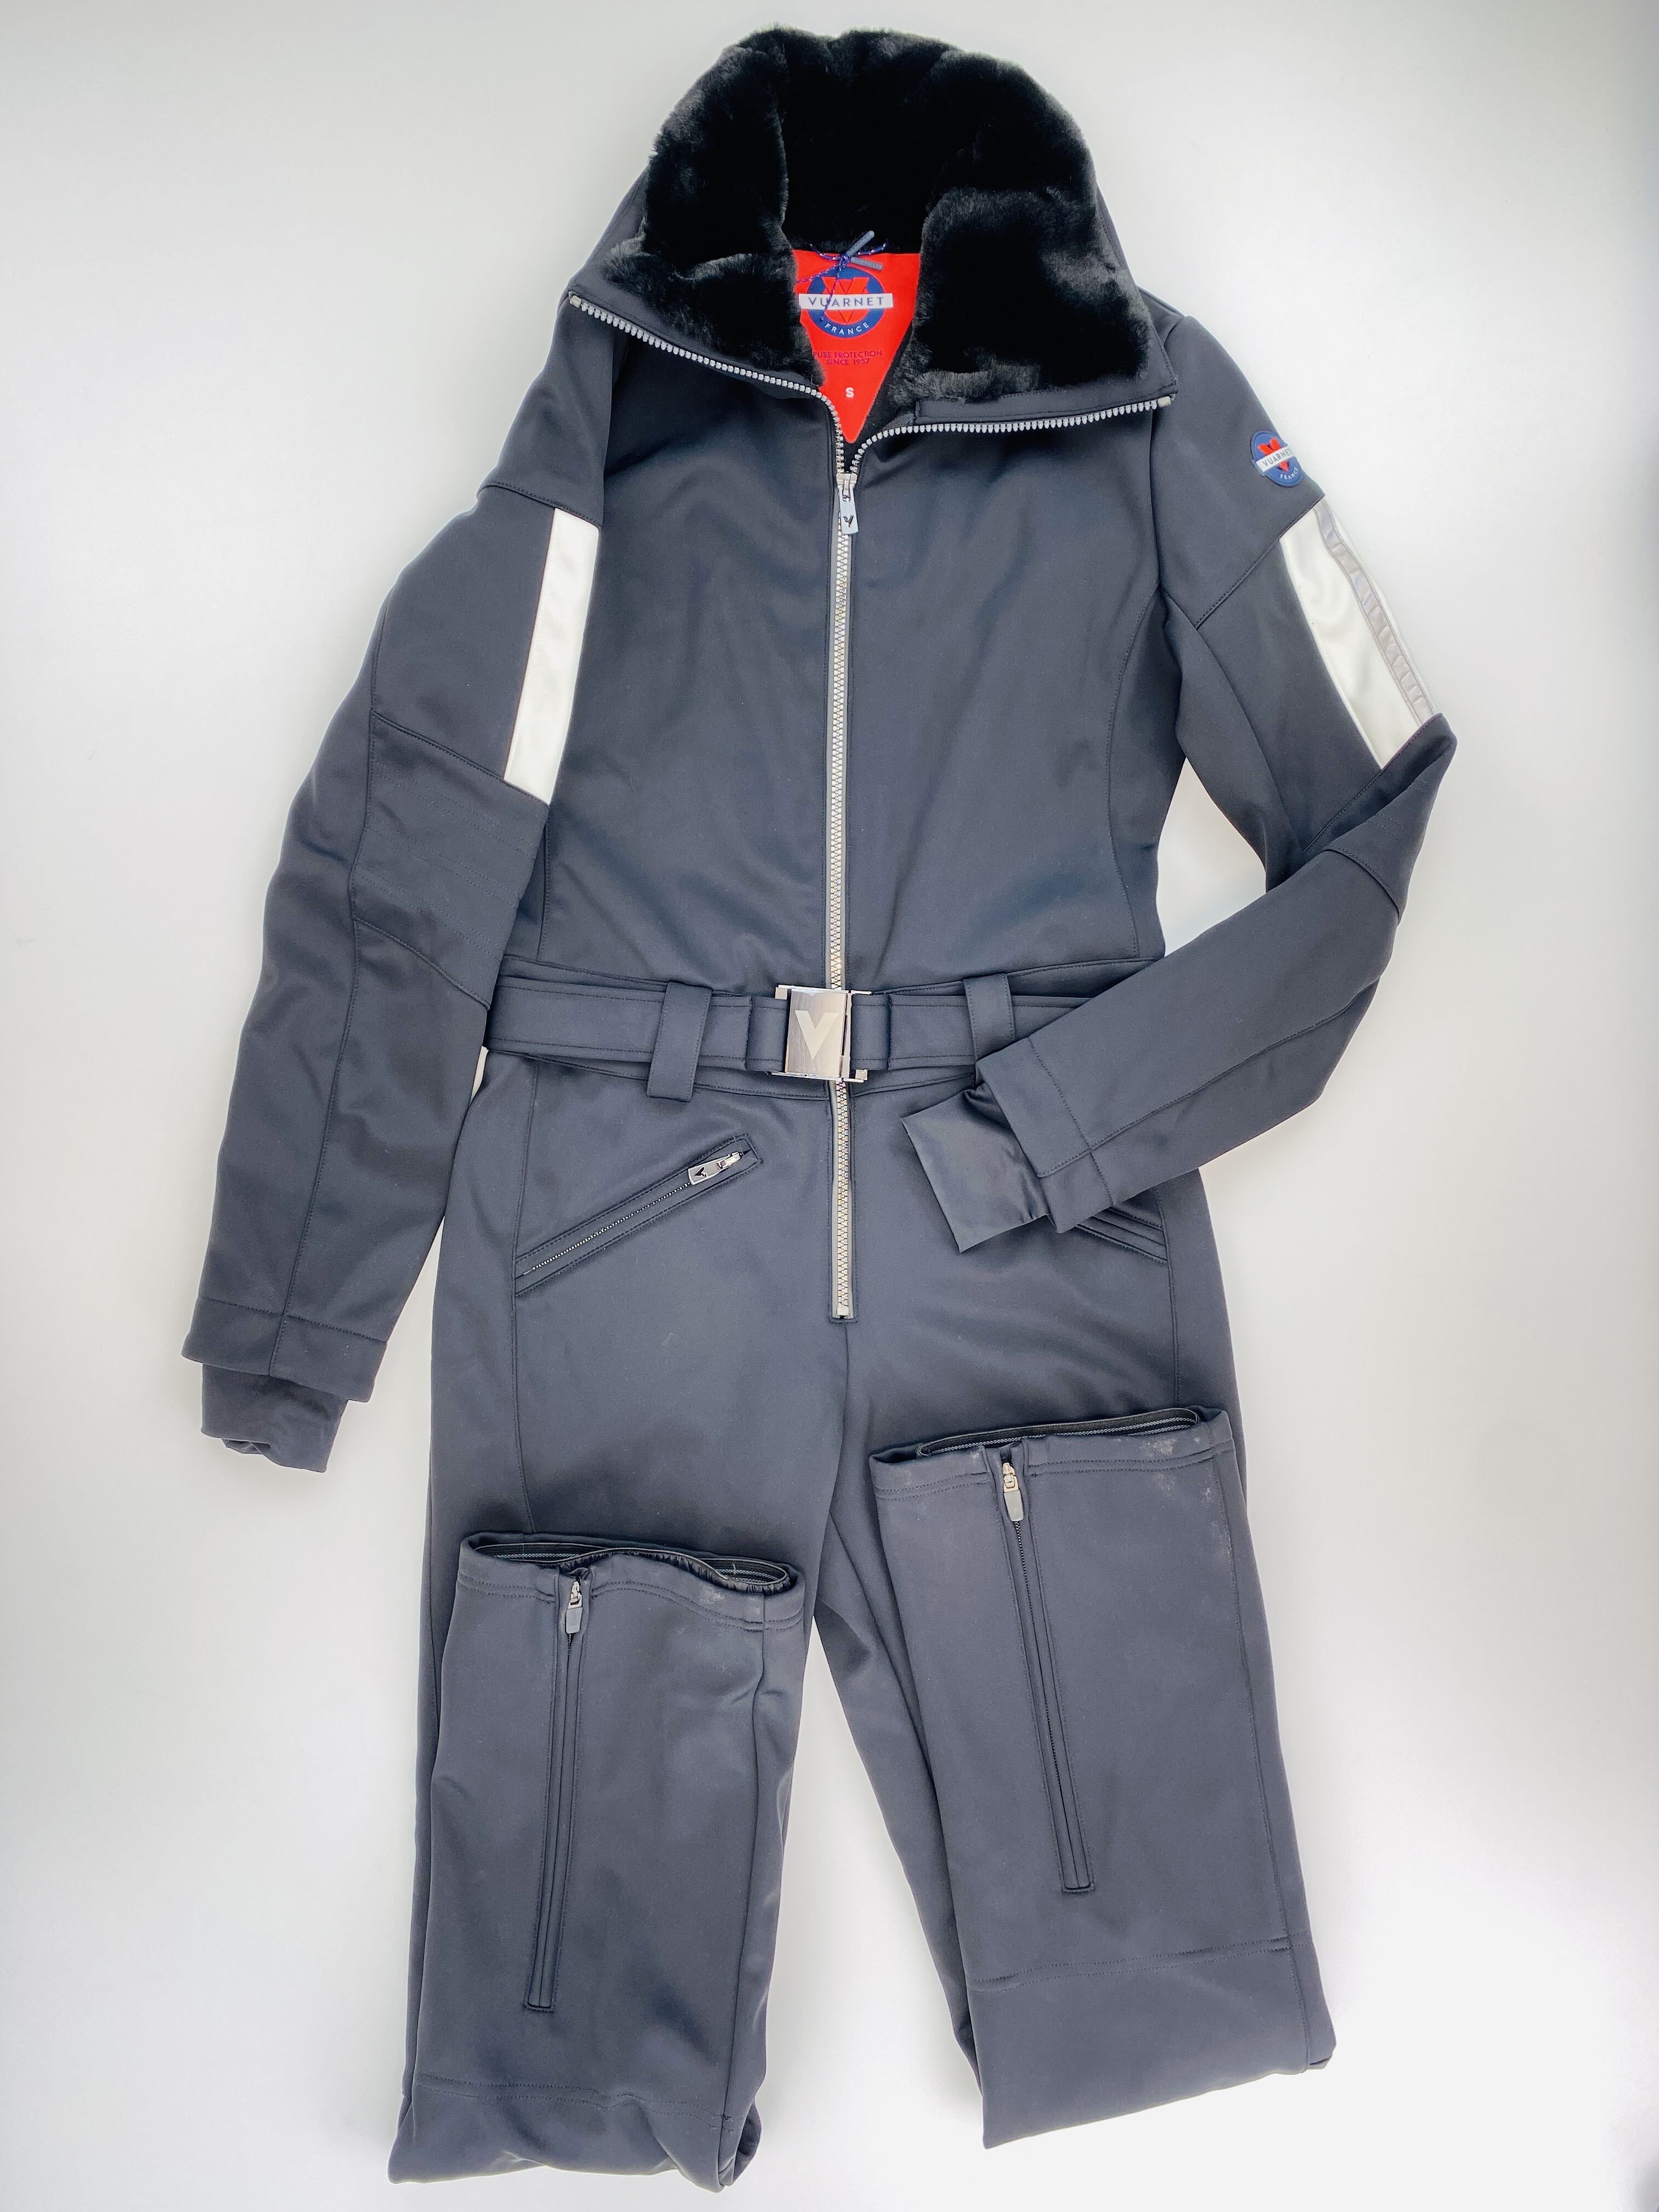 Vuarnet Keith Combinaison - Second Hand Ski jacket - Women's - Black - S | Hardloop